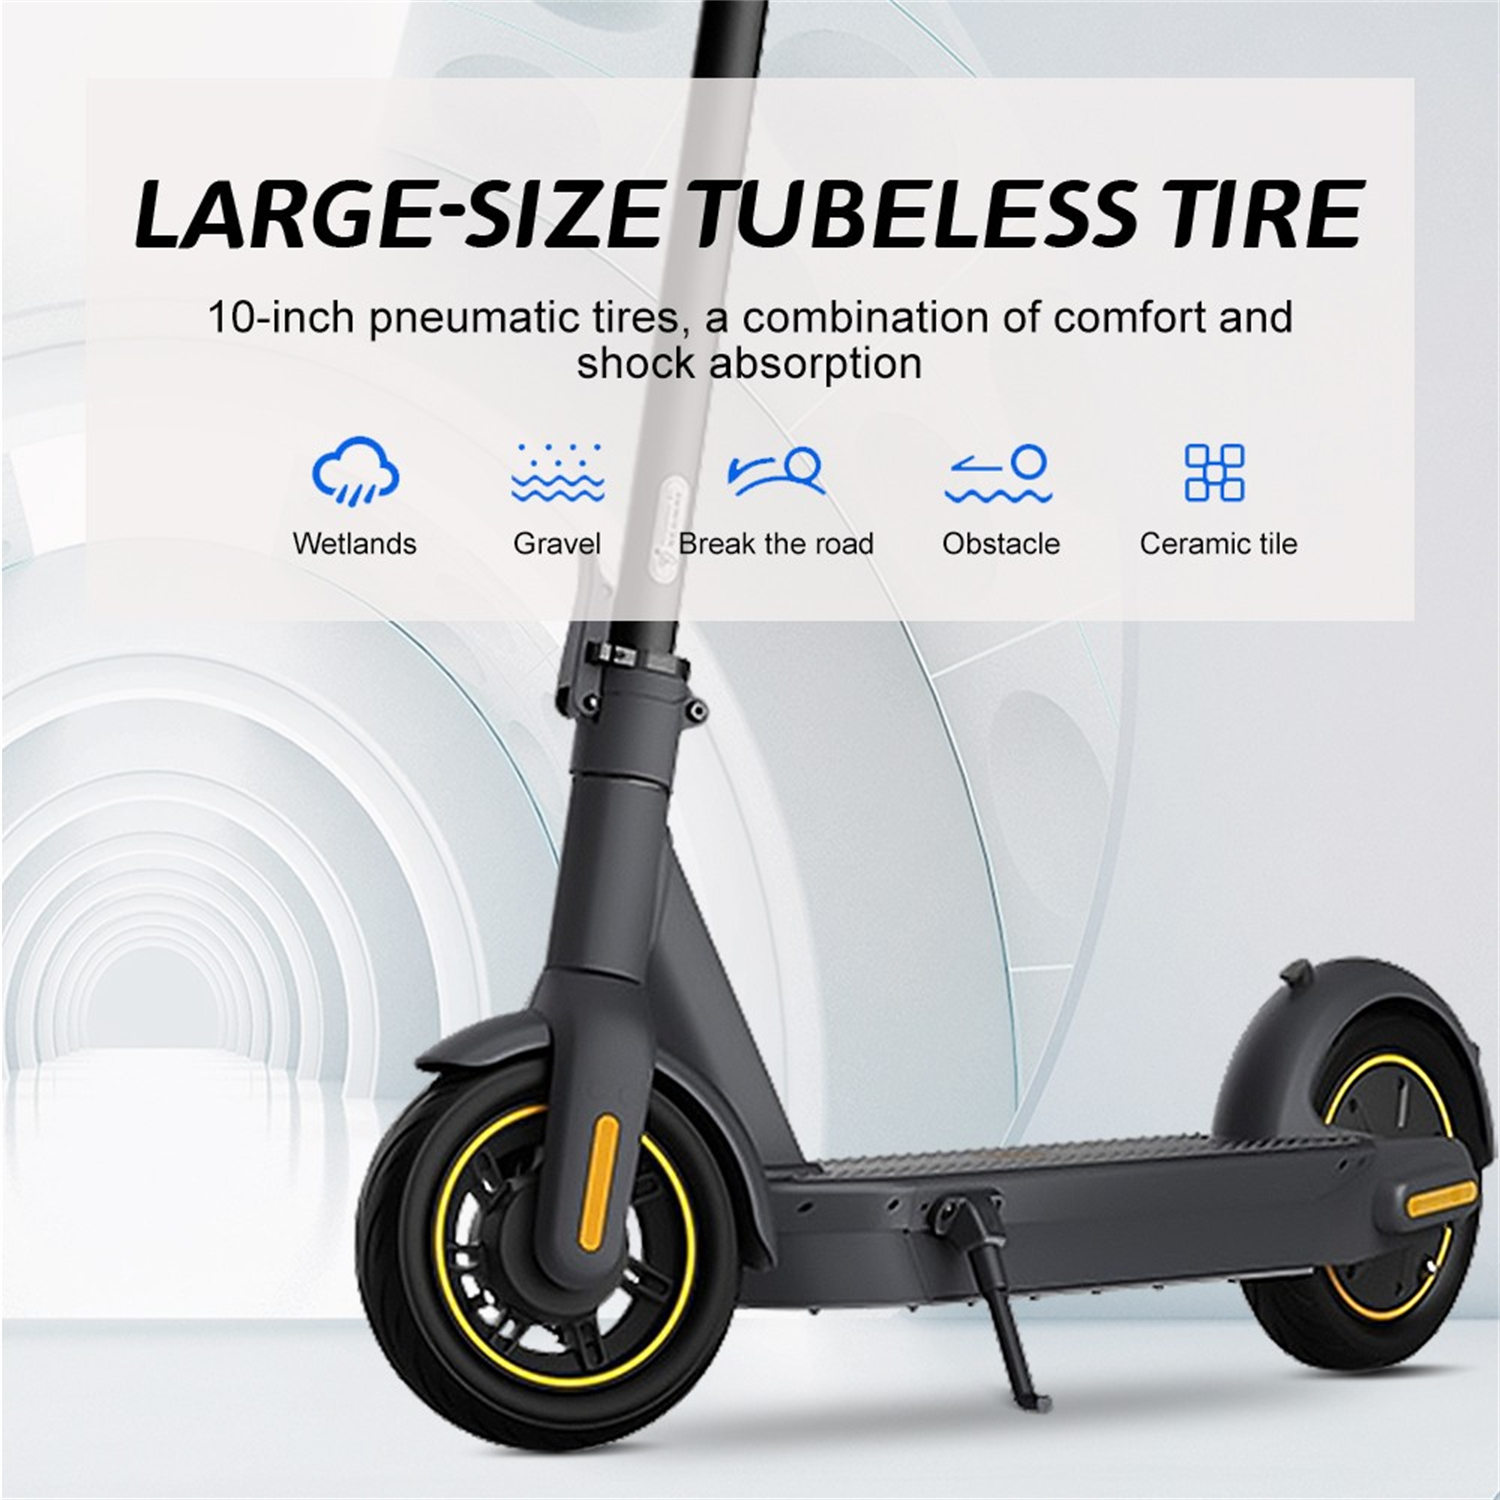 Large-size Tubeless Tire